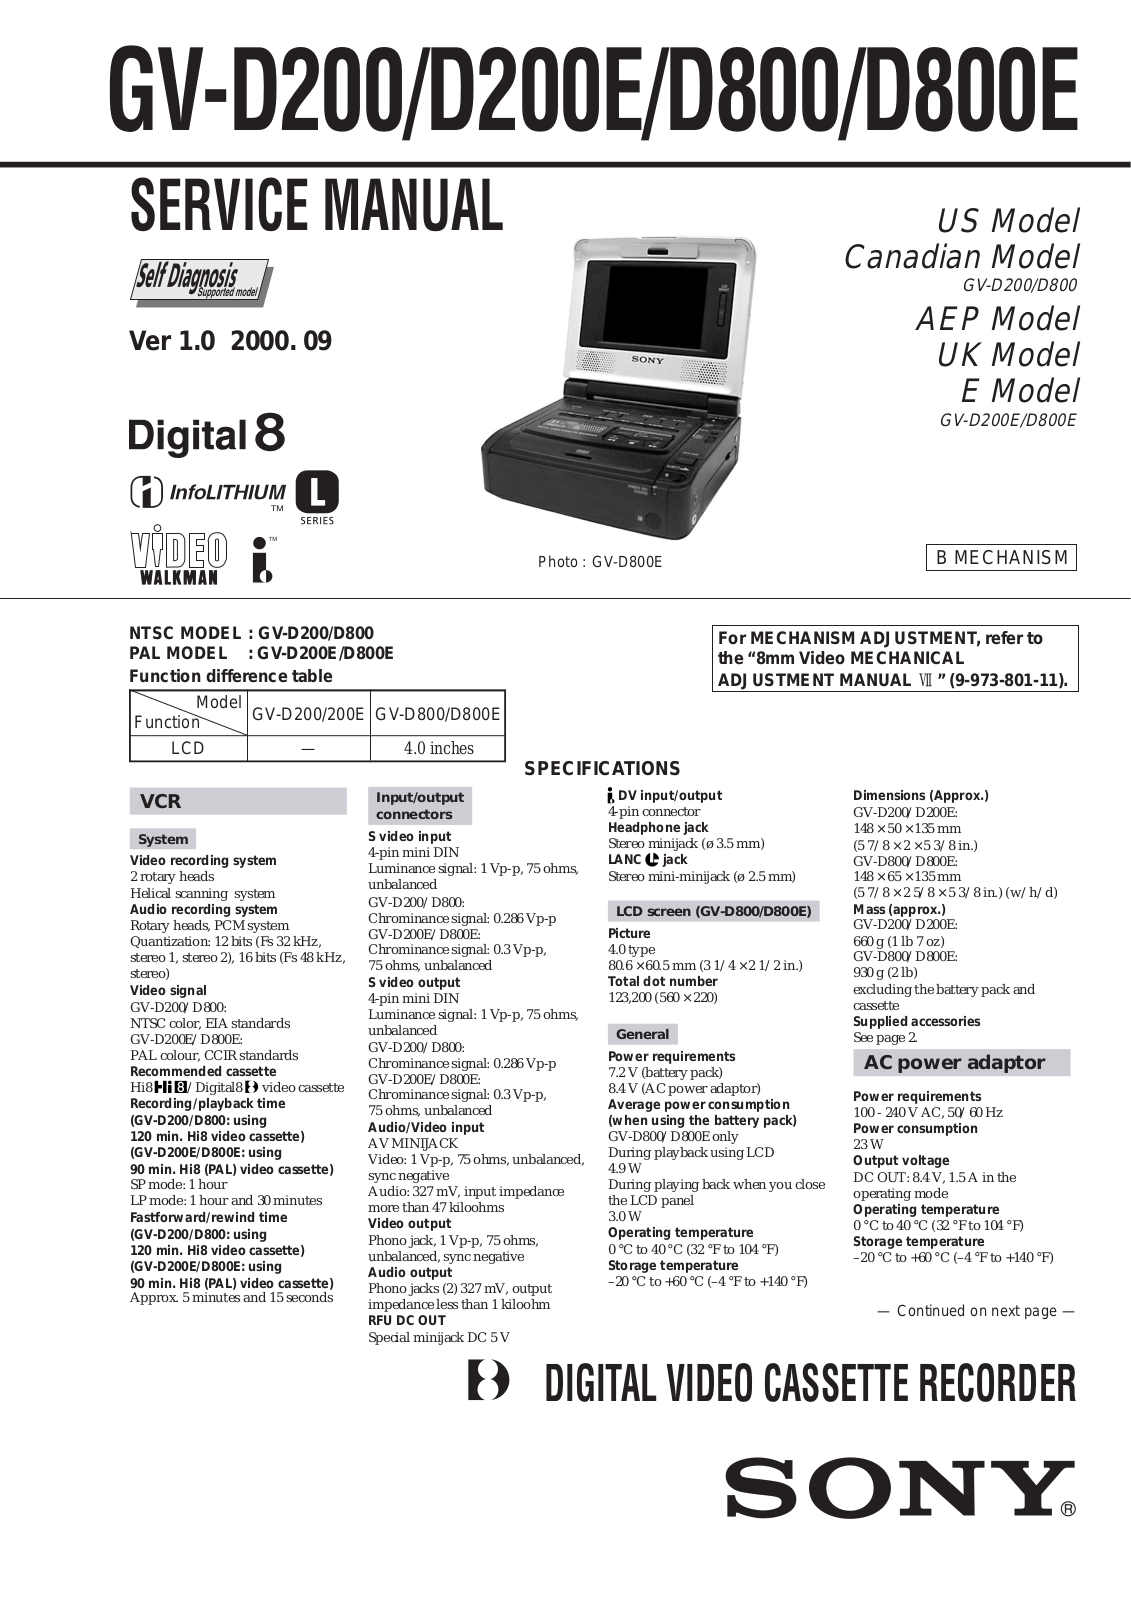 Sony GV-D200, D200E, D800, D800E Service manual